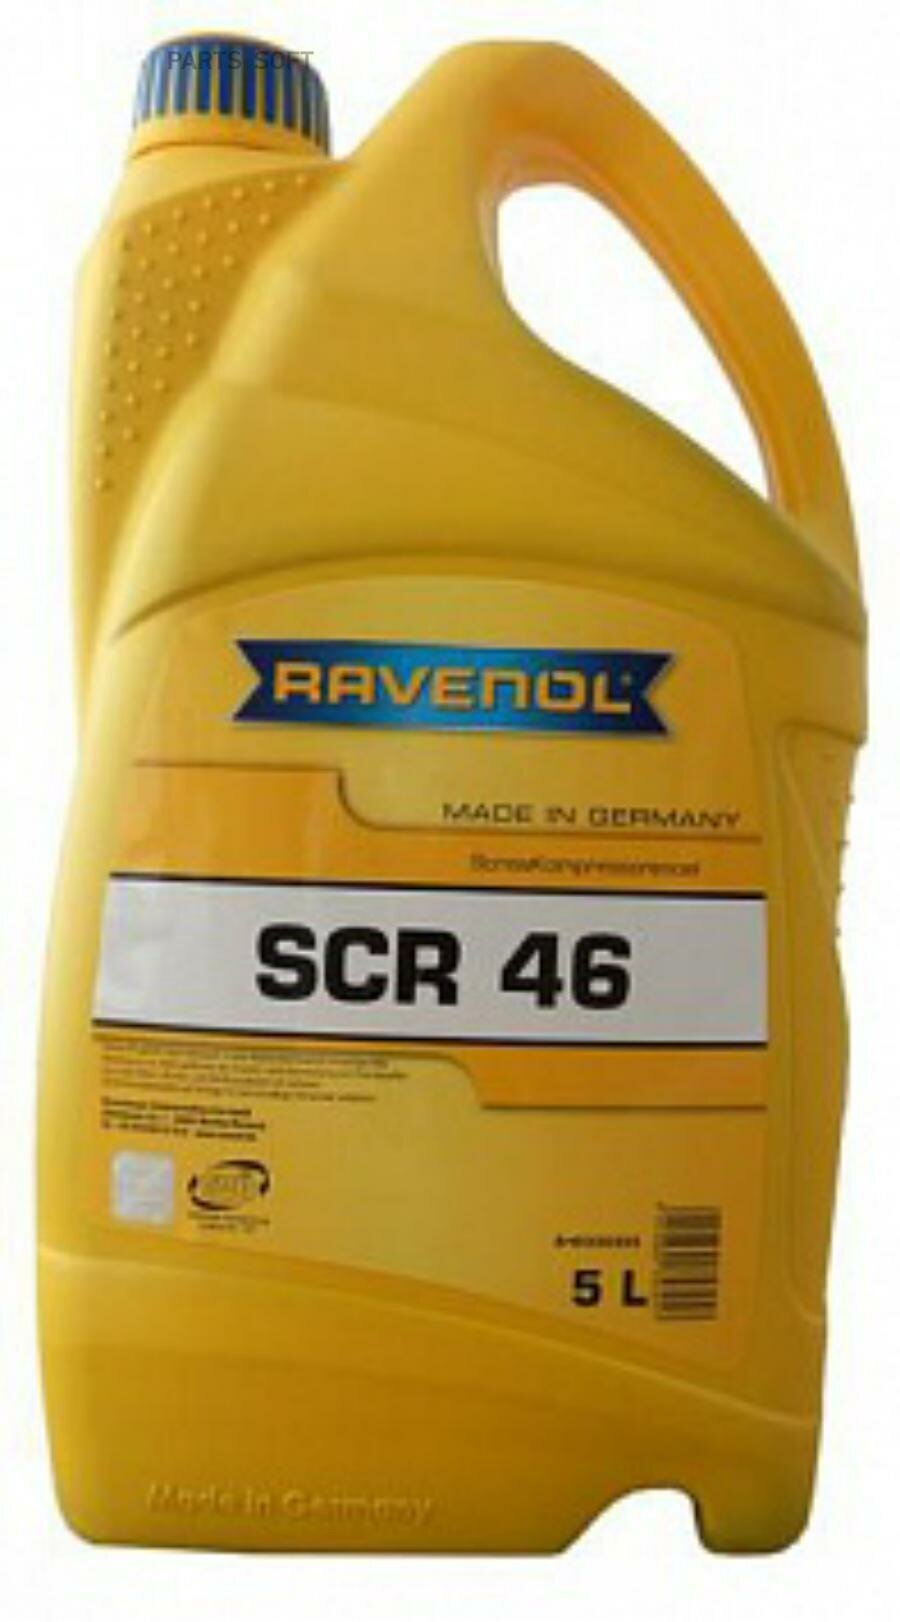 RAVENOL Масло компрессорное Ravenol Kompressorenoel screew scr 46, минеральное, 5L 4014835757257